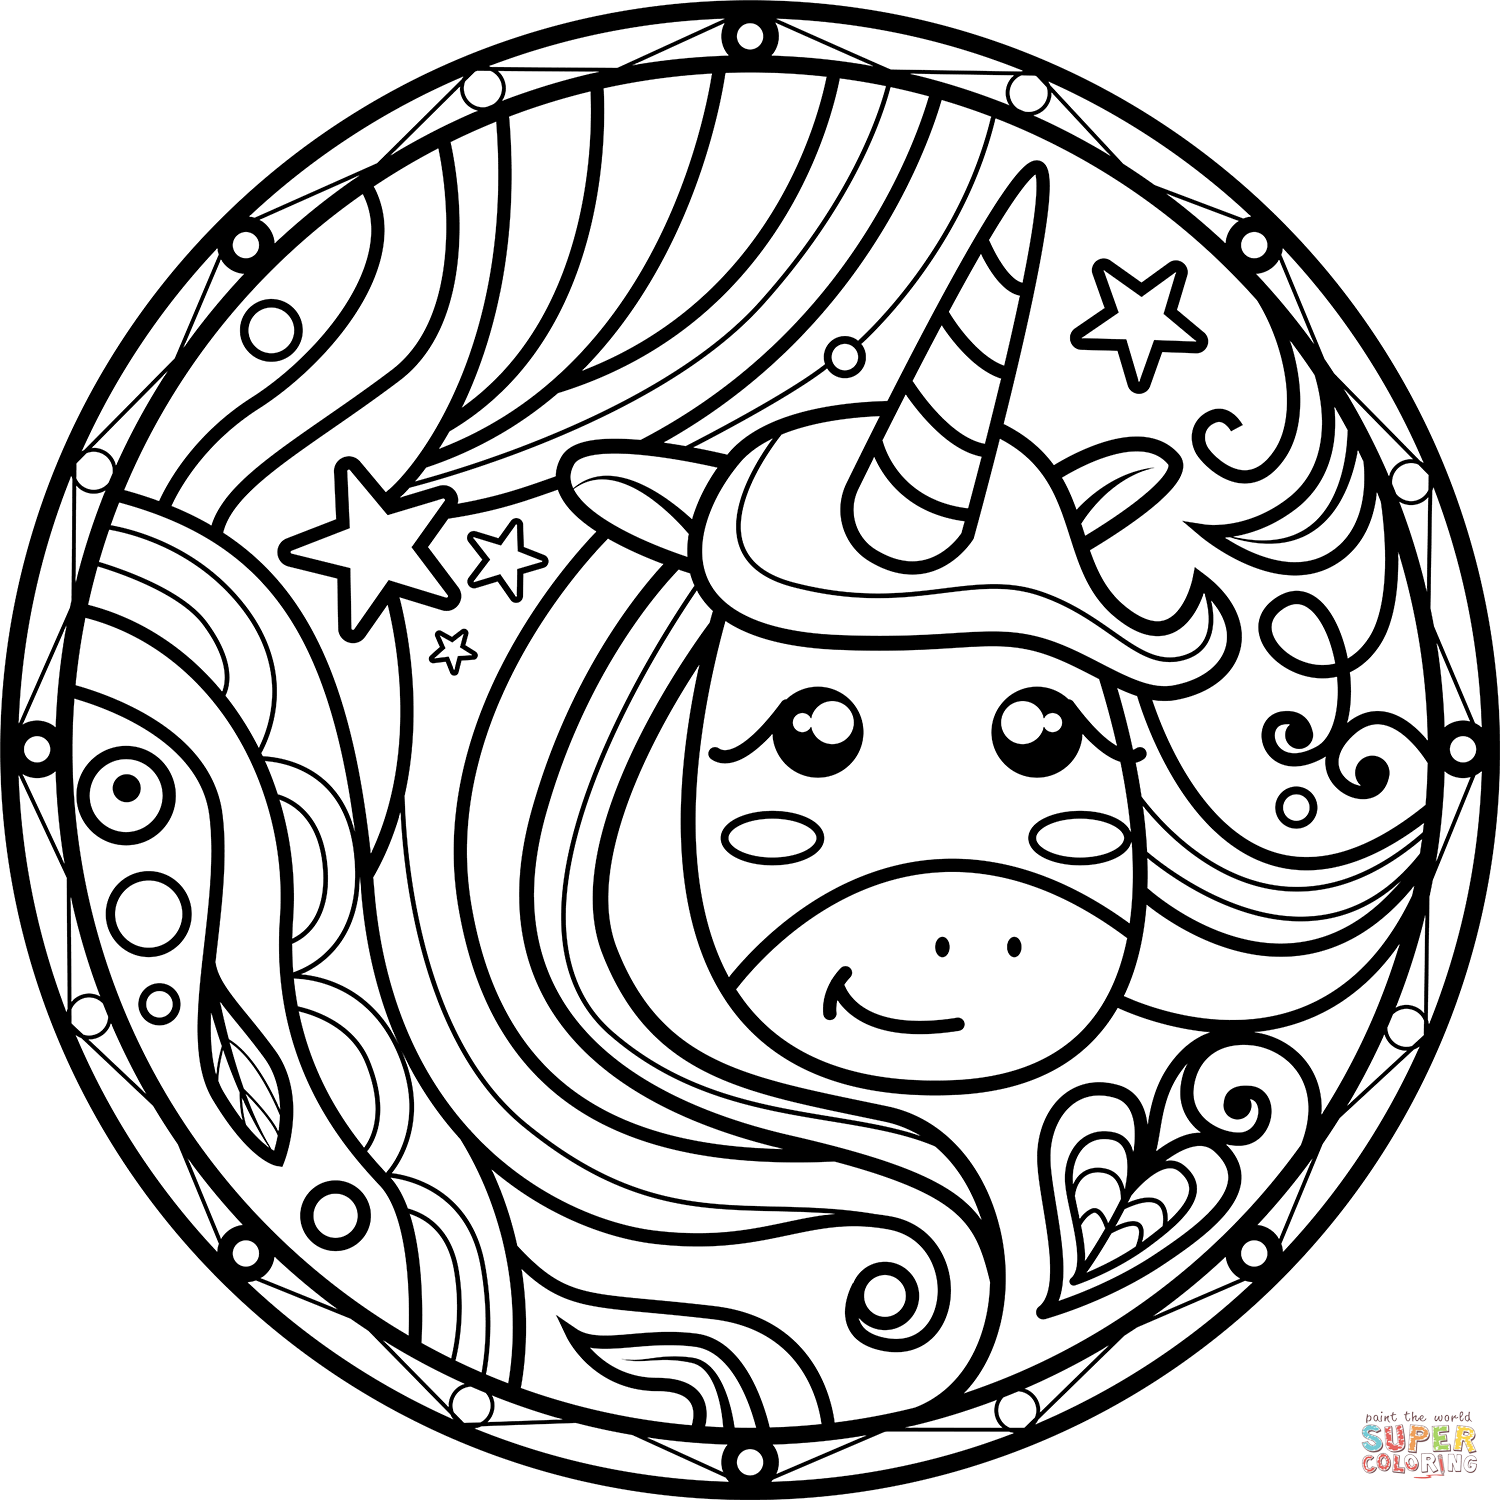 Unicorn Mandala coloring page | Free Printable Coloring Pages